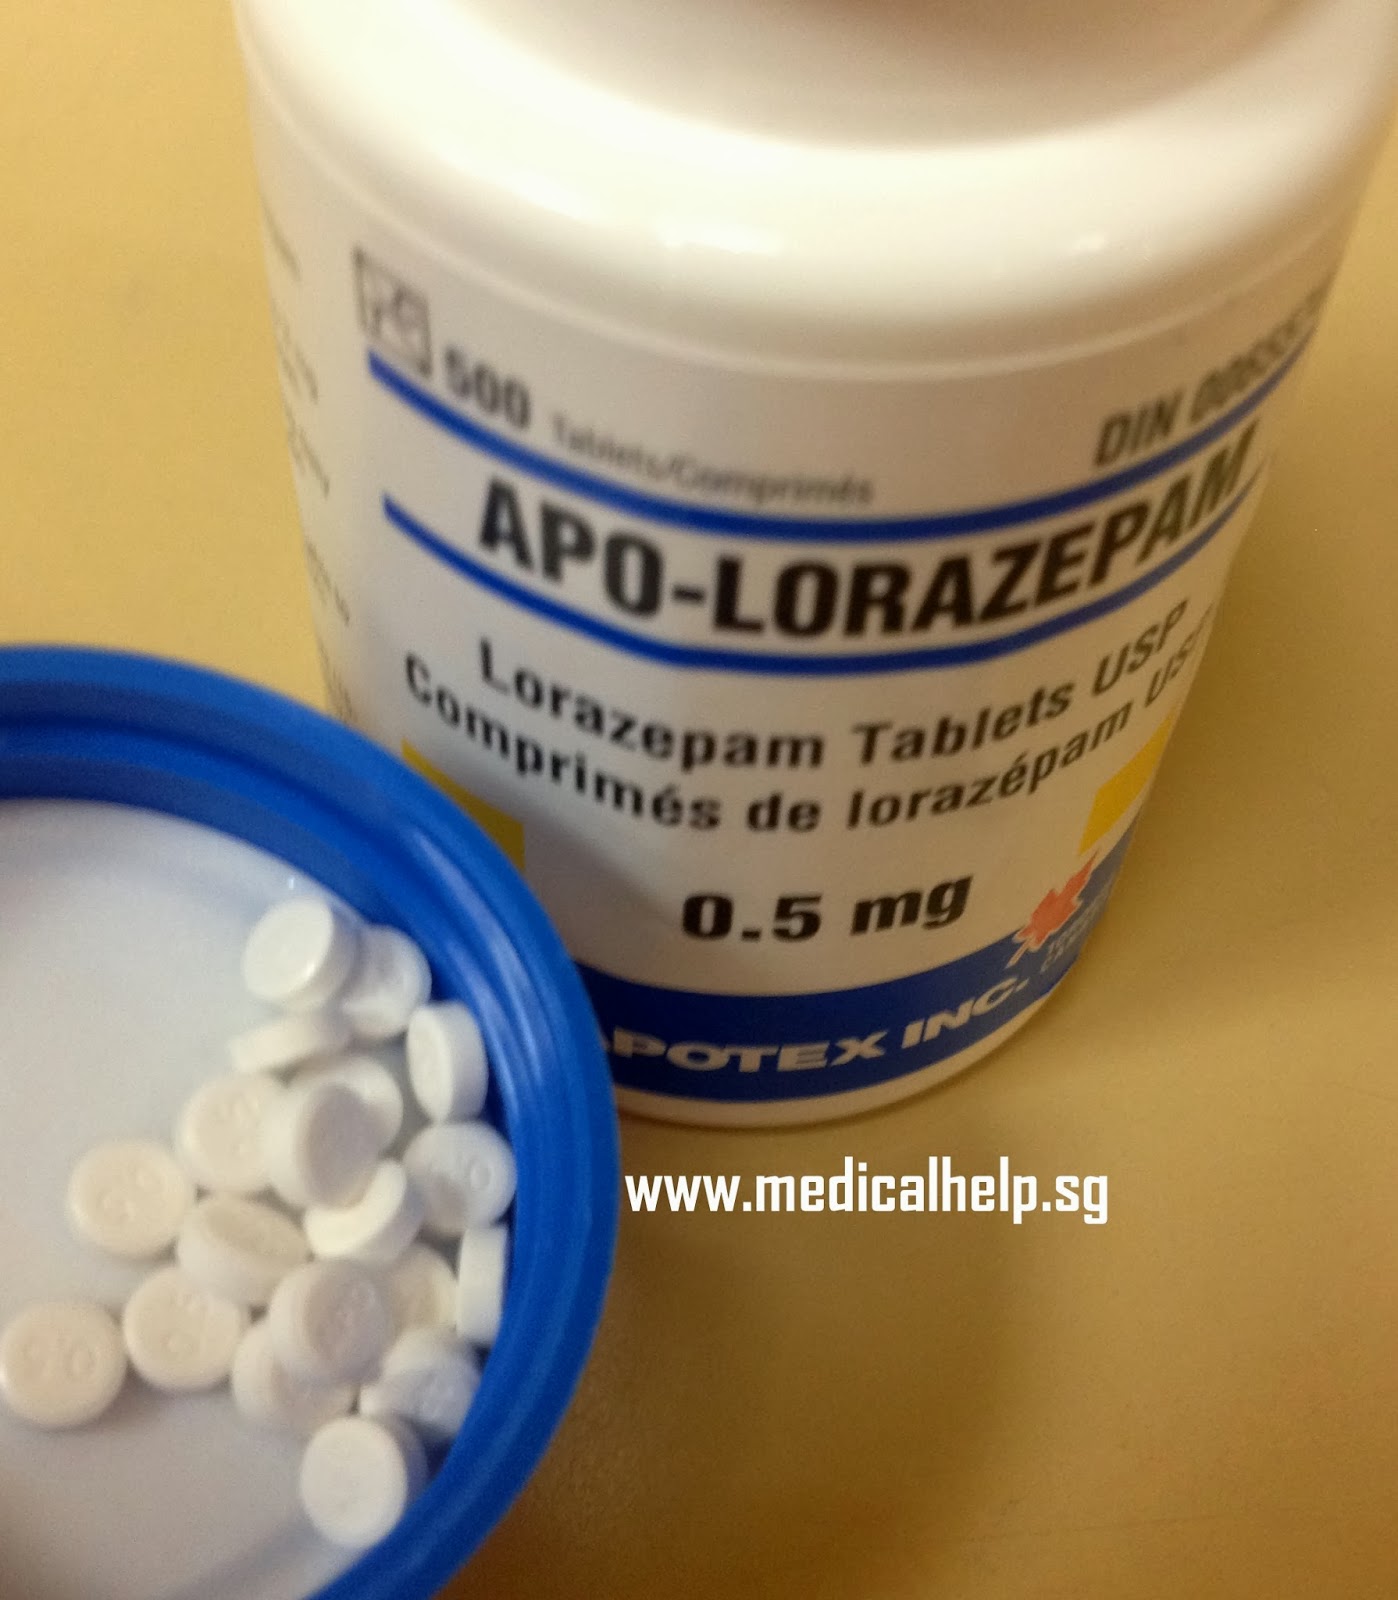 Patient Information On Lorazepam